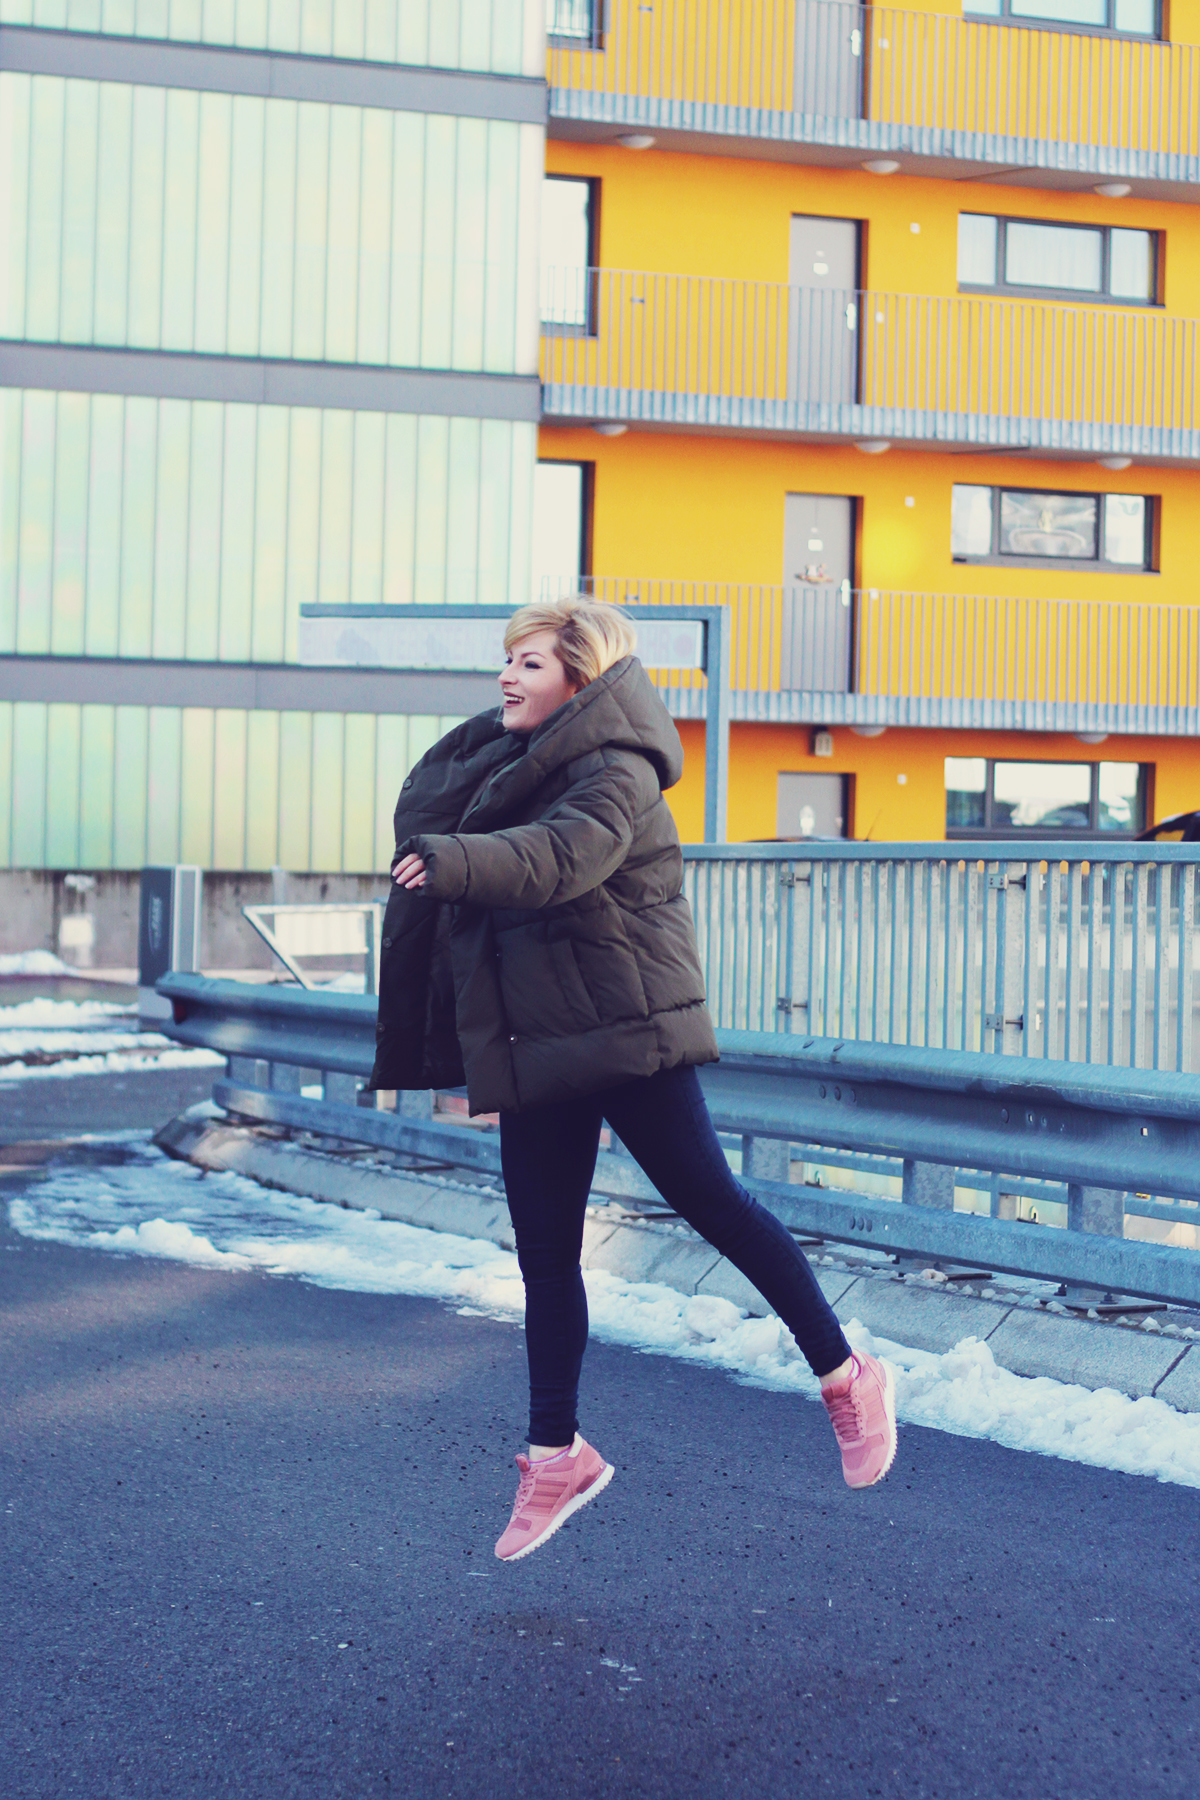 winter fashion, padded jacket, jeans, pink adidas originals, girl jumping, urban landscape, Vienna, snow